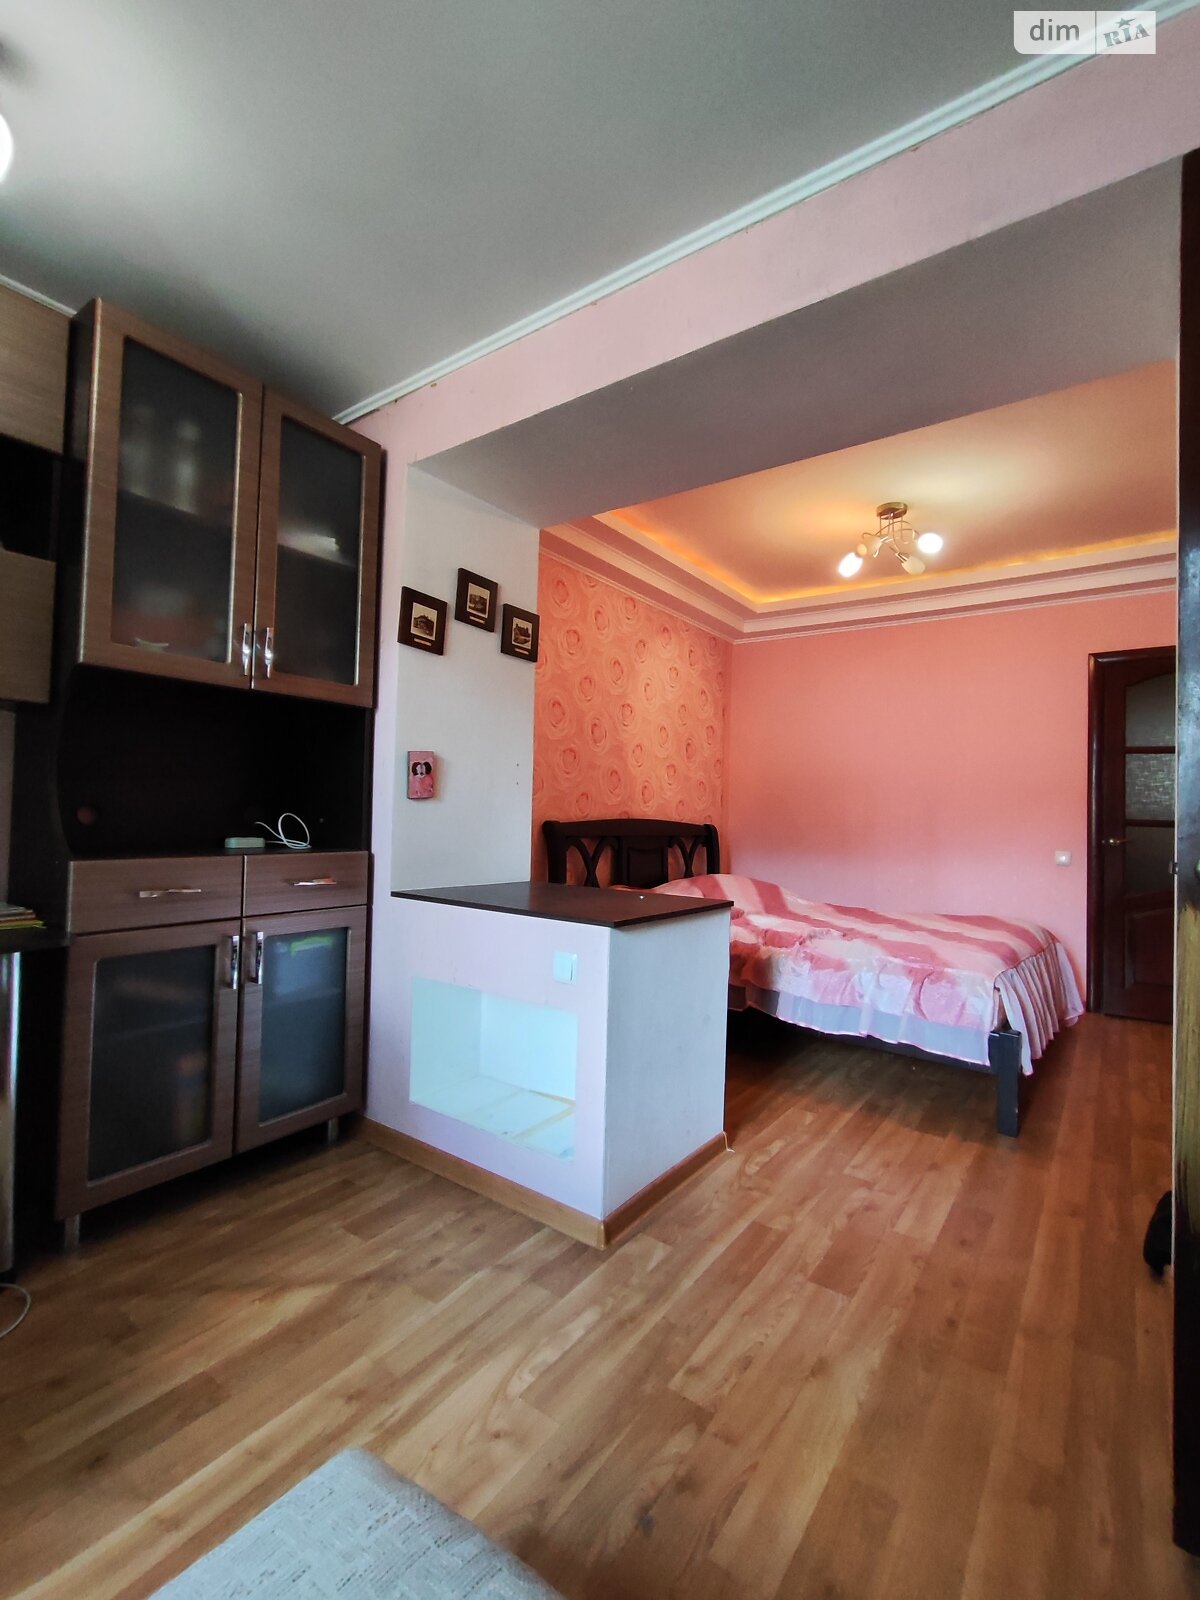 Продажа двухкомнатной квартиры в Чернигове, на ул. Князя Черного 13, район Центр фото 1